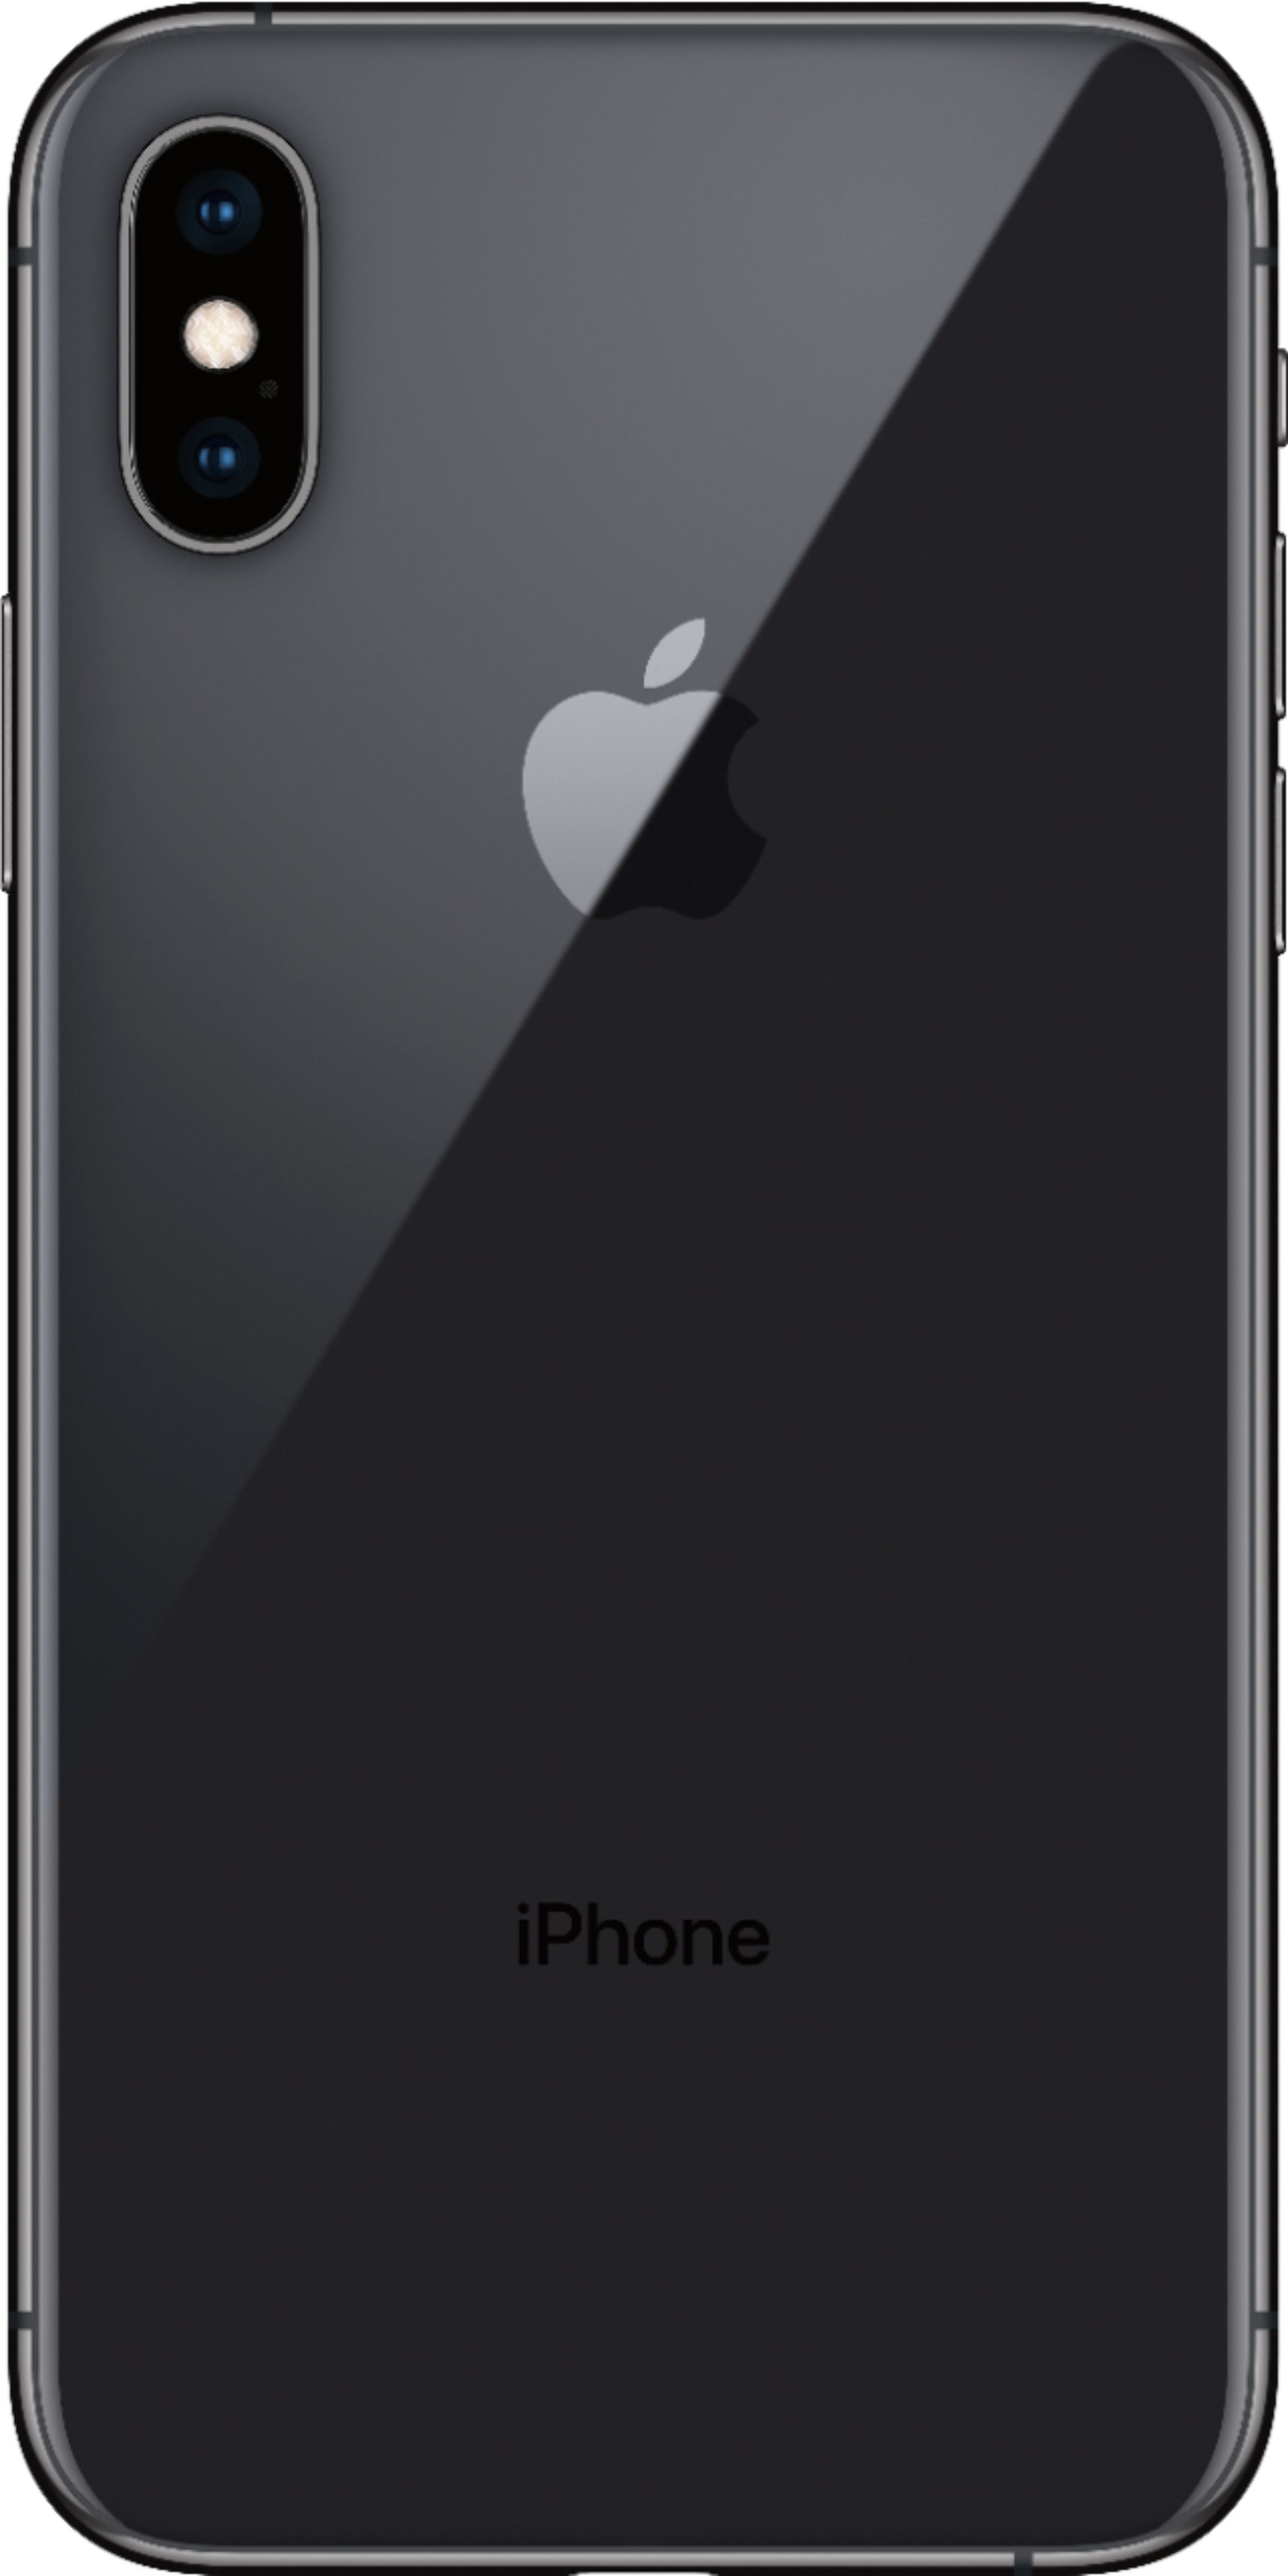 Apple iPhone XS 256GB Space Gray (Verizon) MT972LL/A - Best Buy